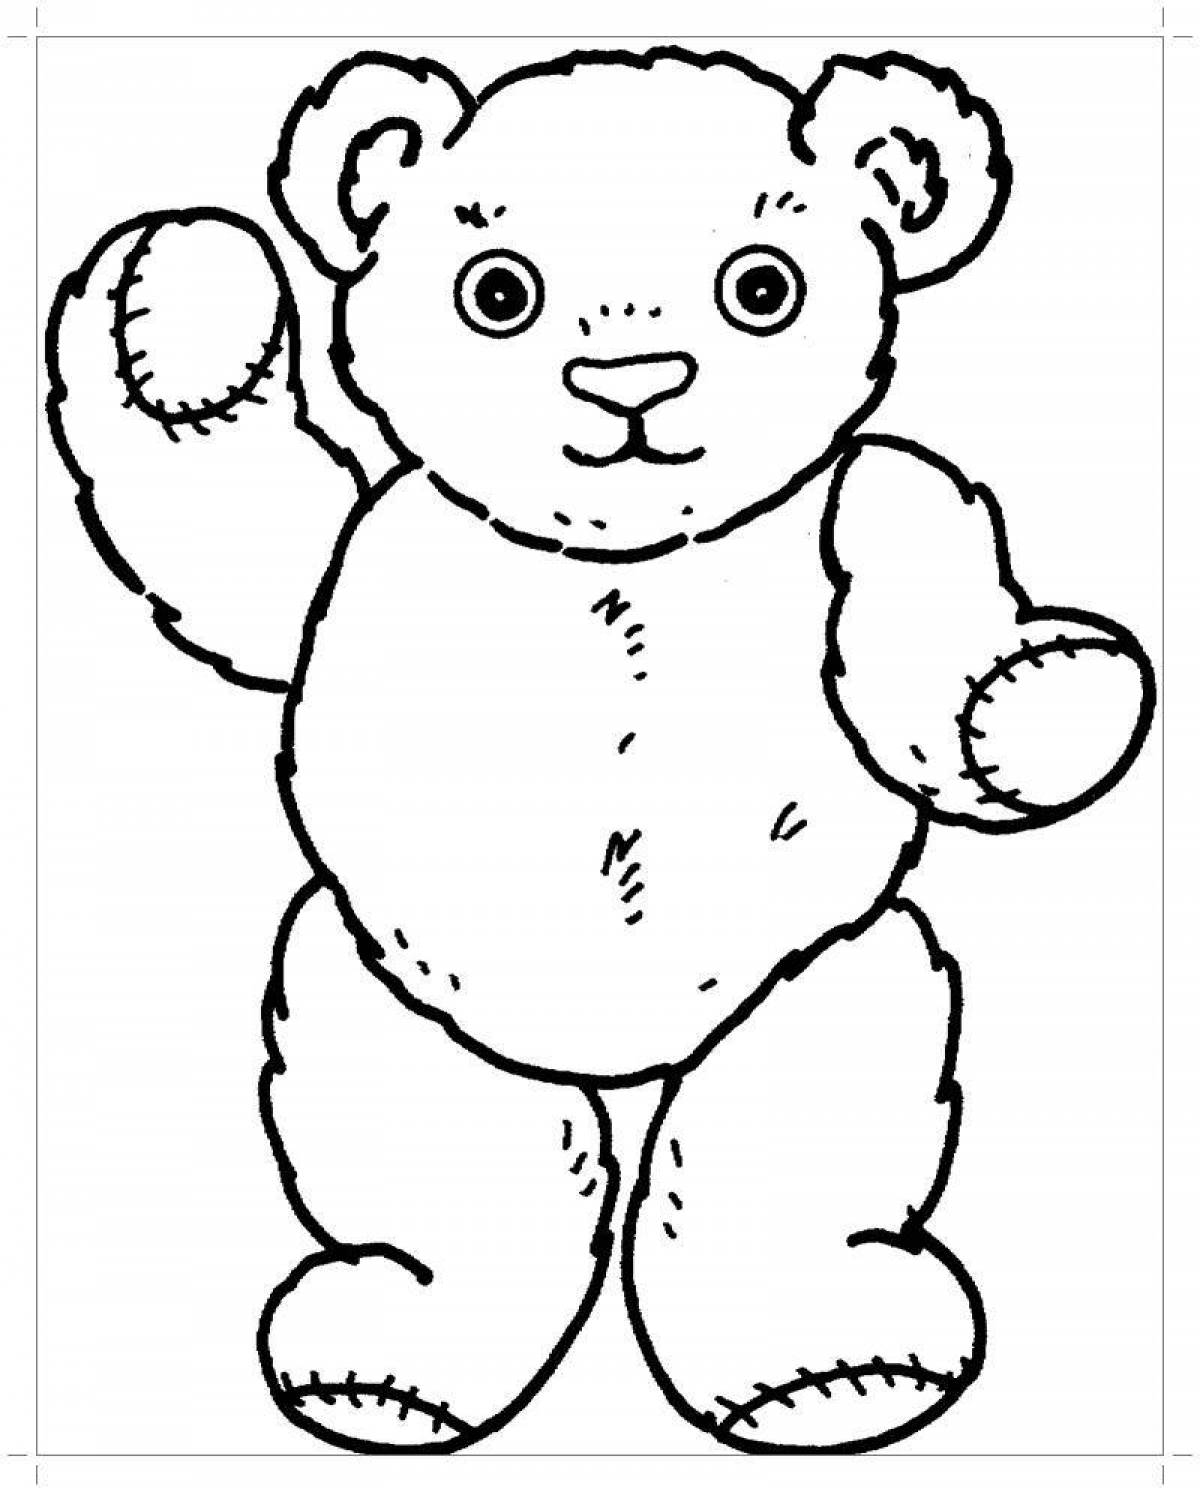 Amazing teddy bear coloring book